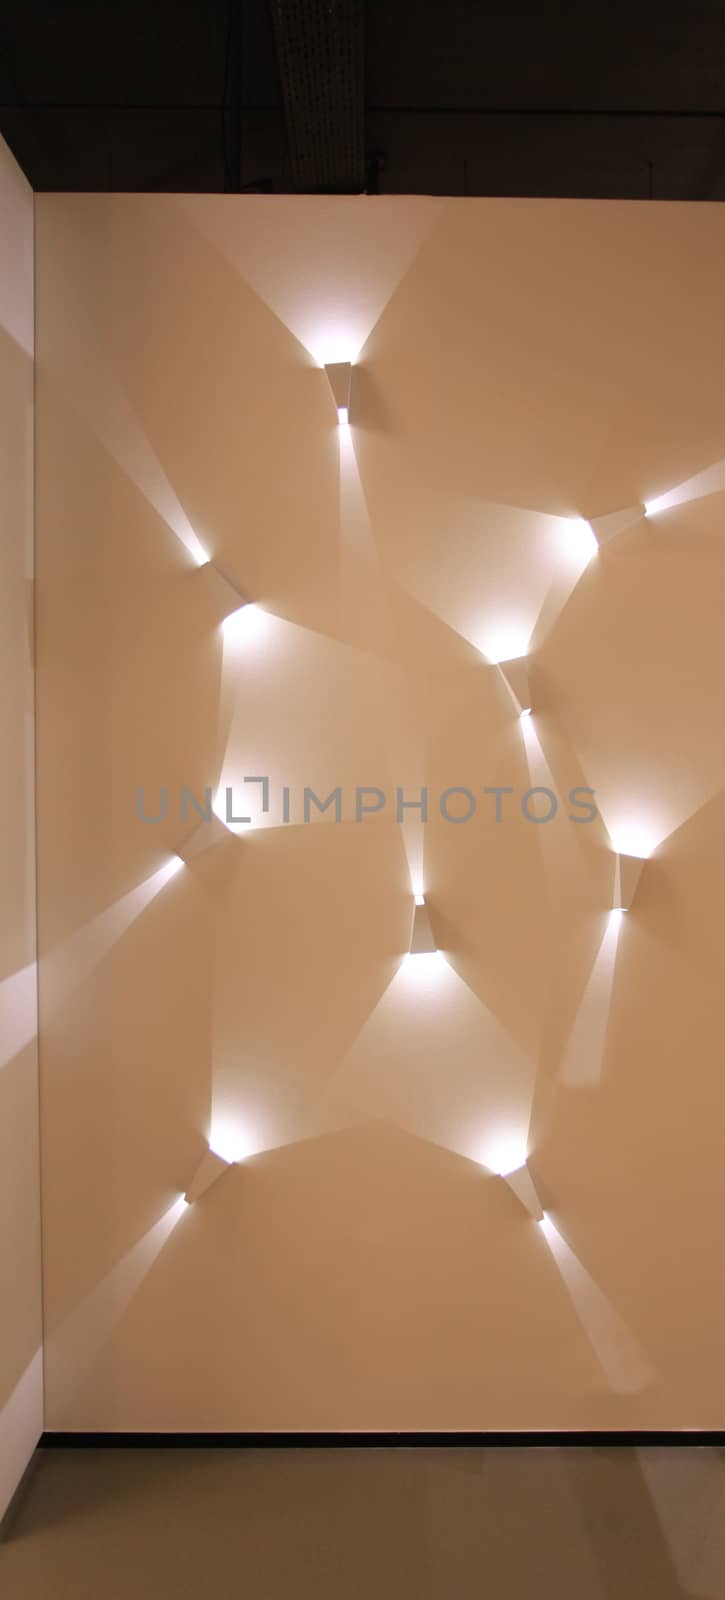 modern led light abstract installation in interior